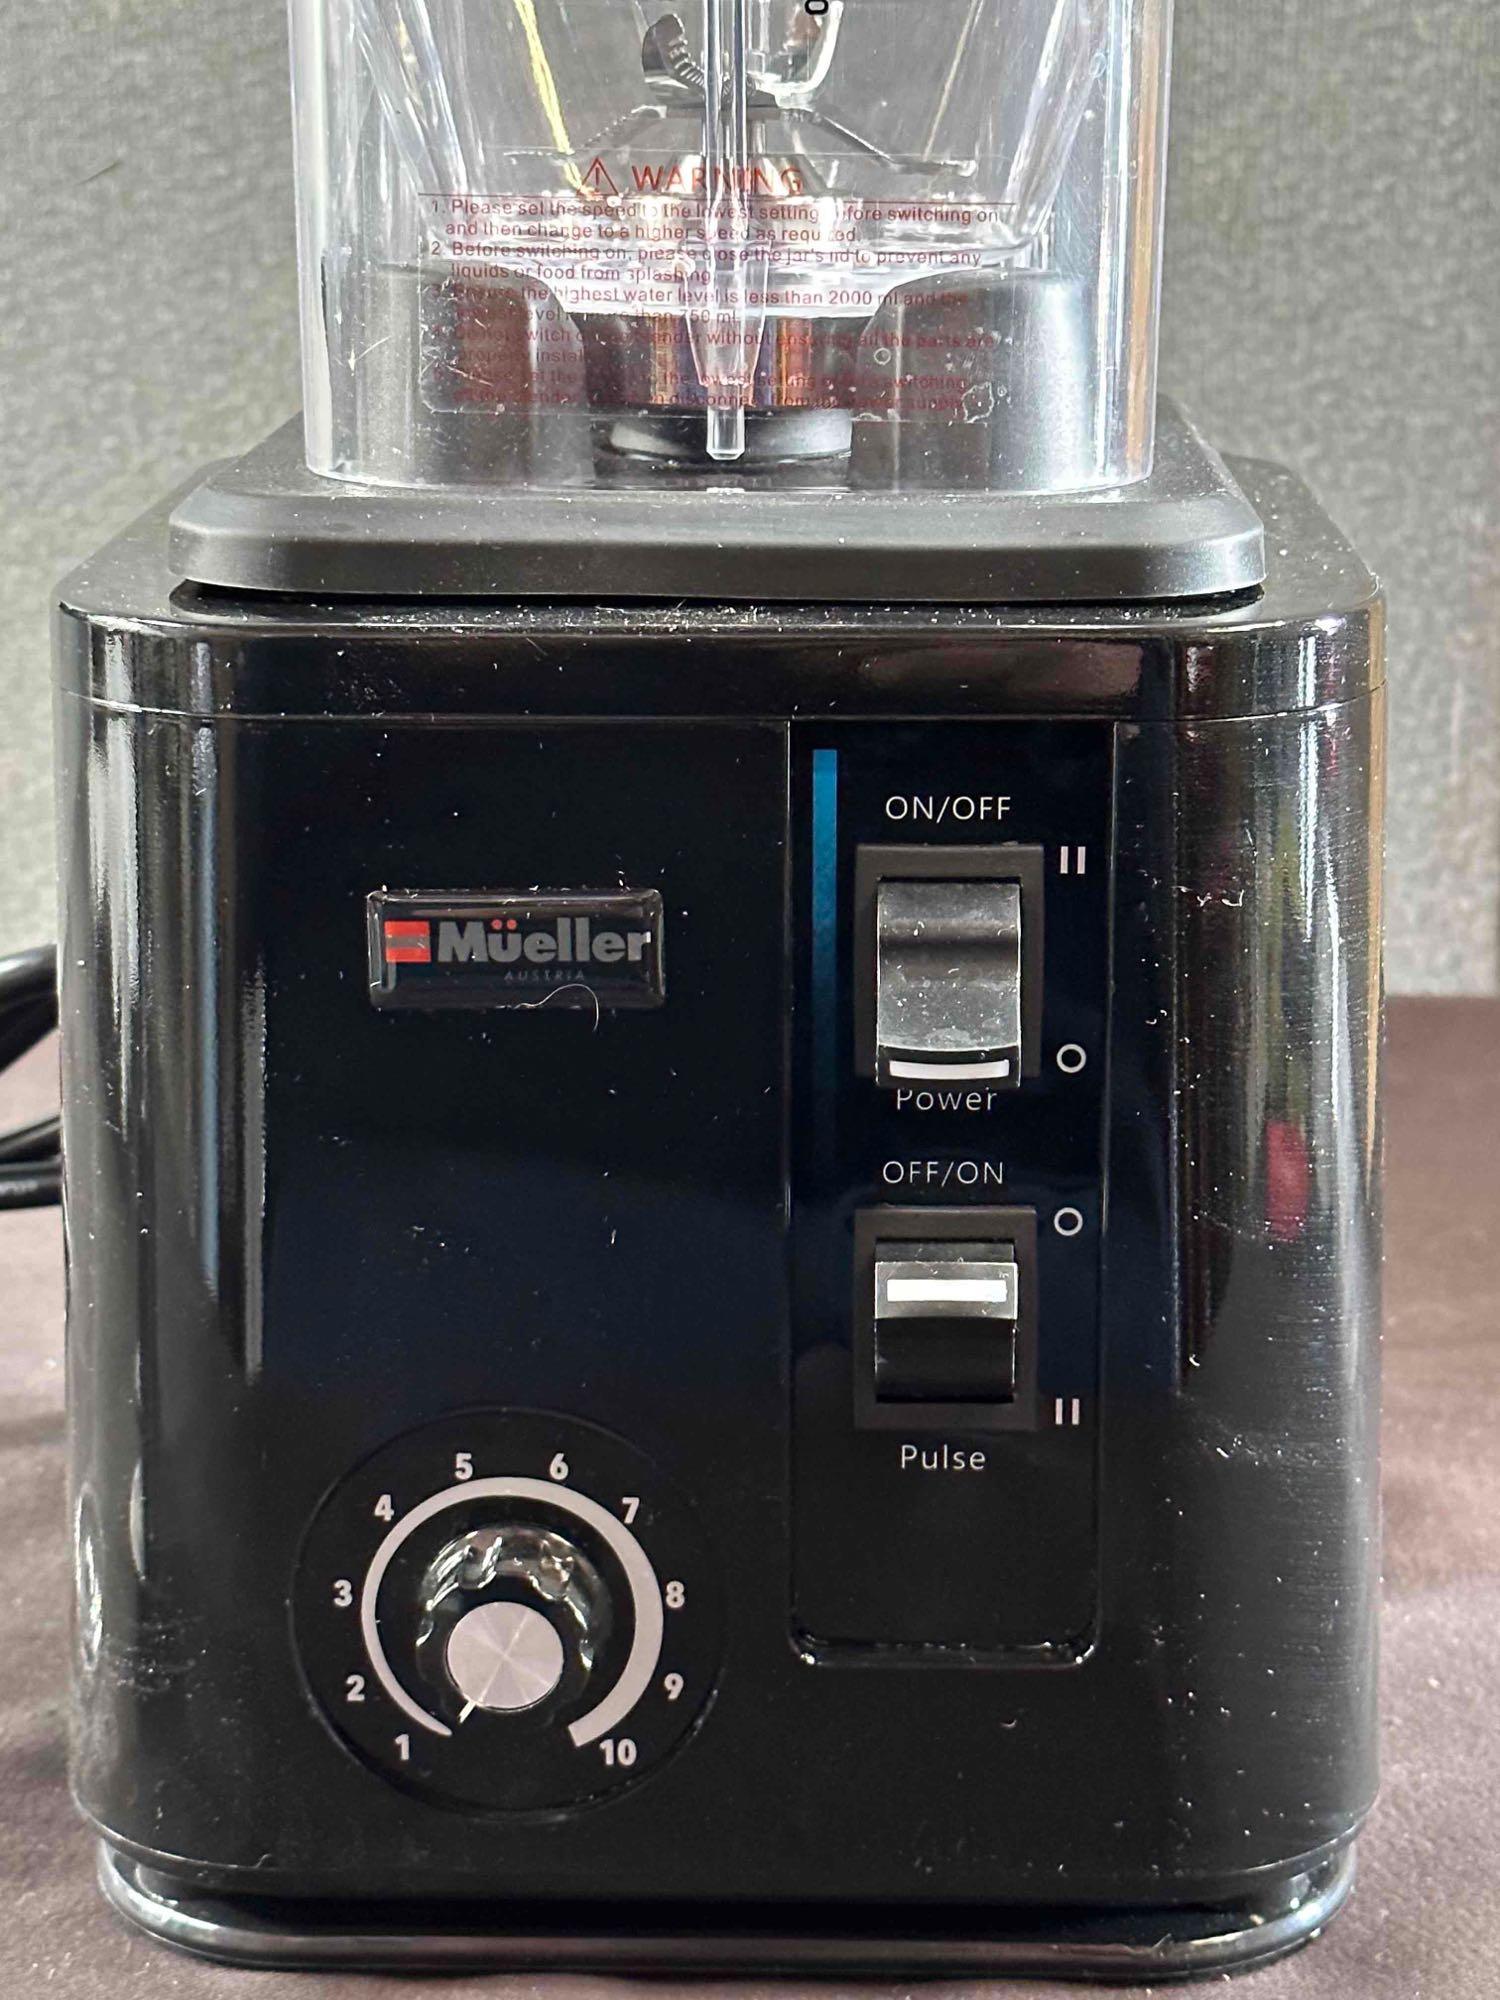 Mueller DuraBlend, 10-Speed 3.0hp Professional Series Blender